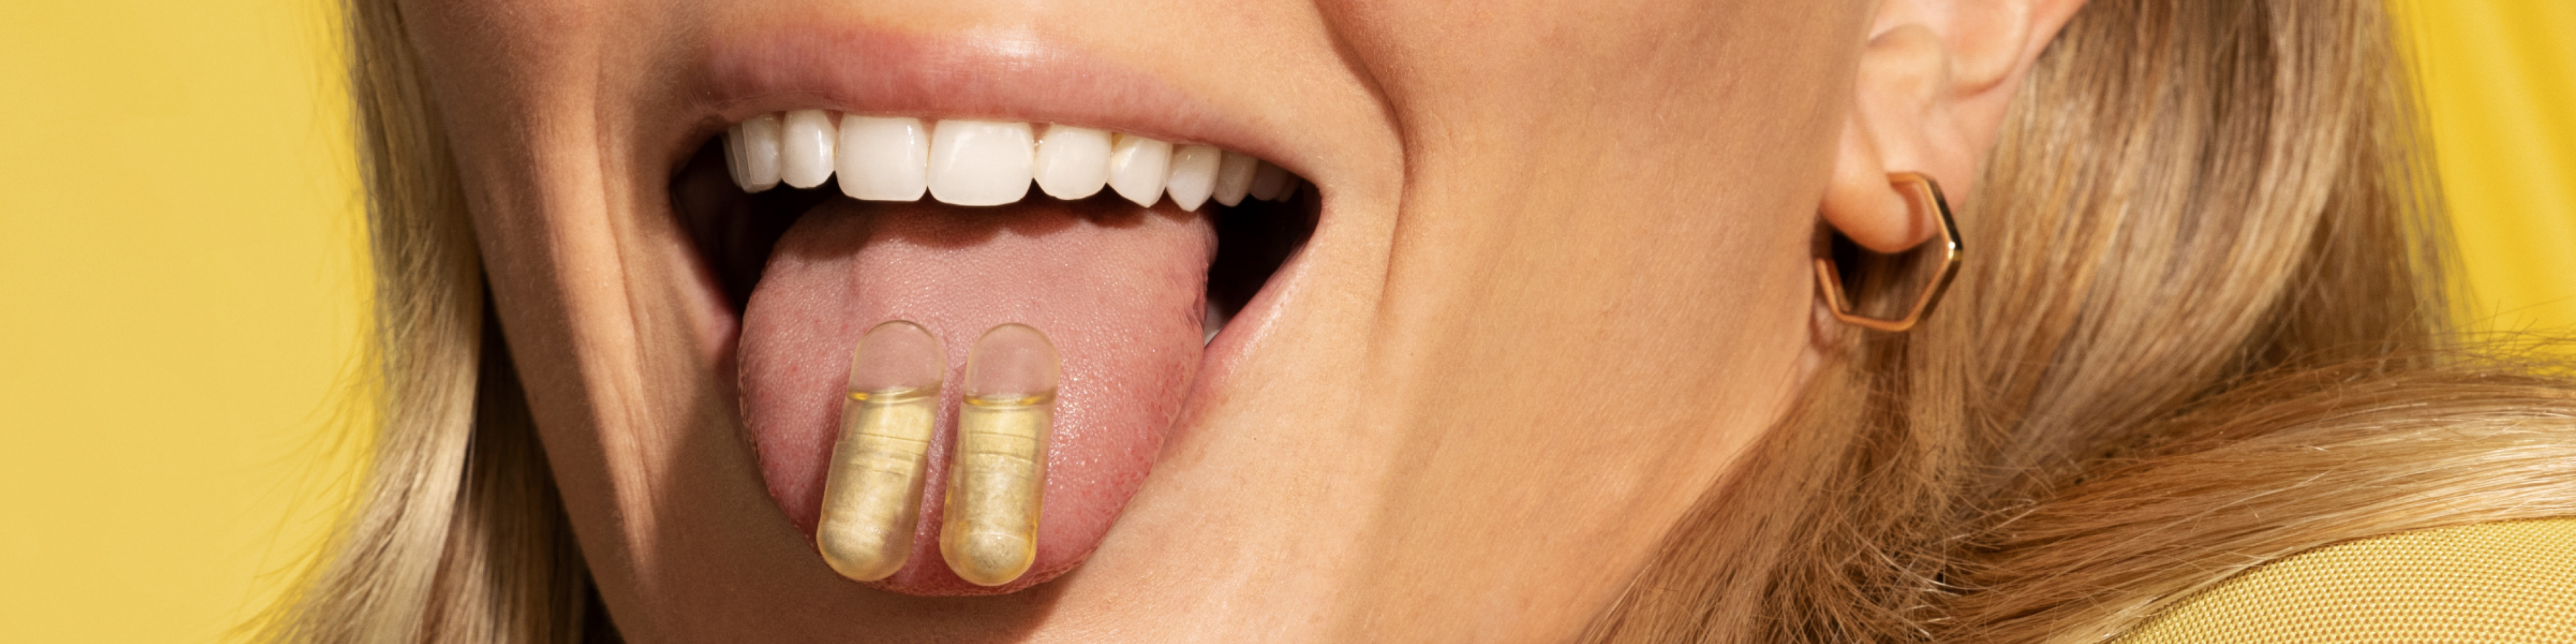 Two prenatal vitamins on a woman's tongue.